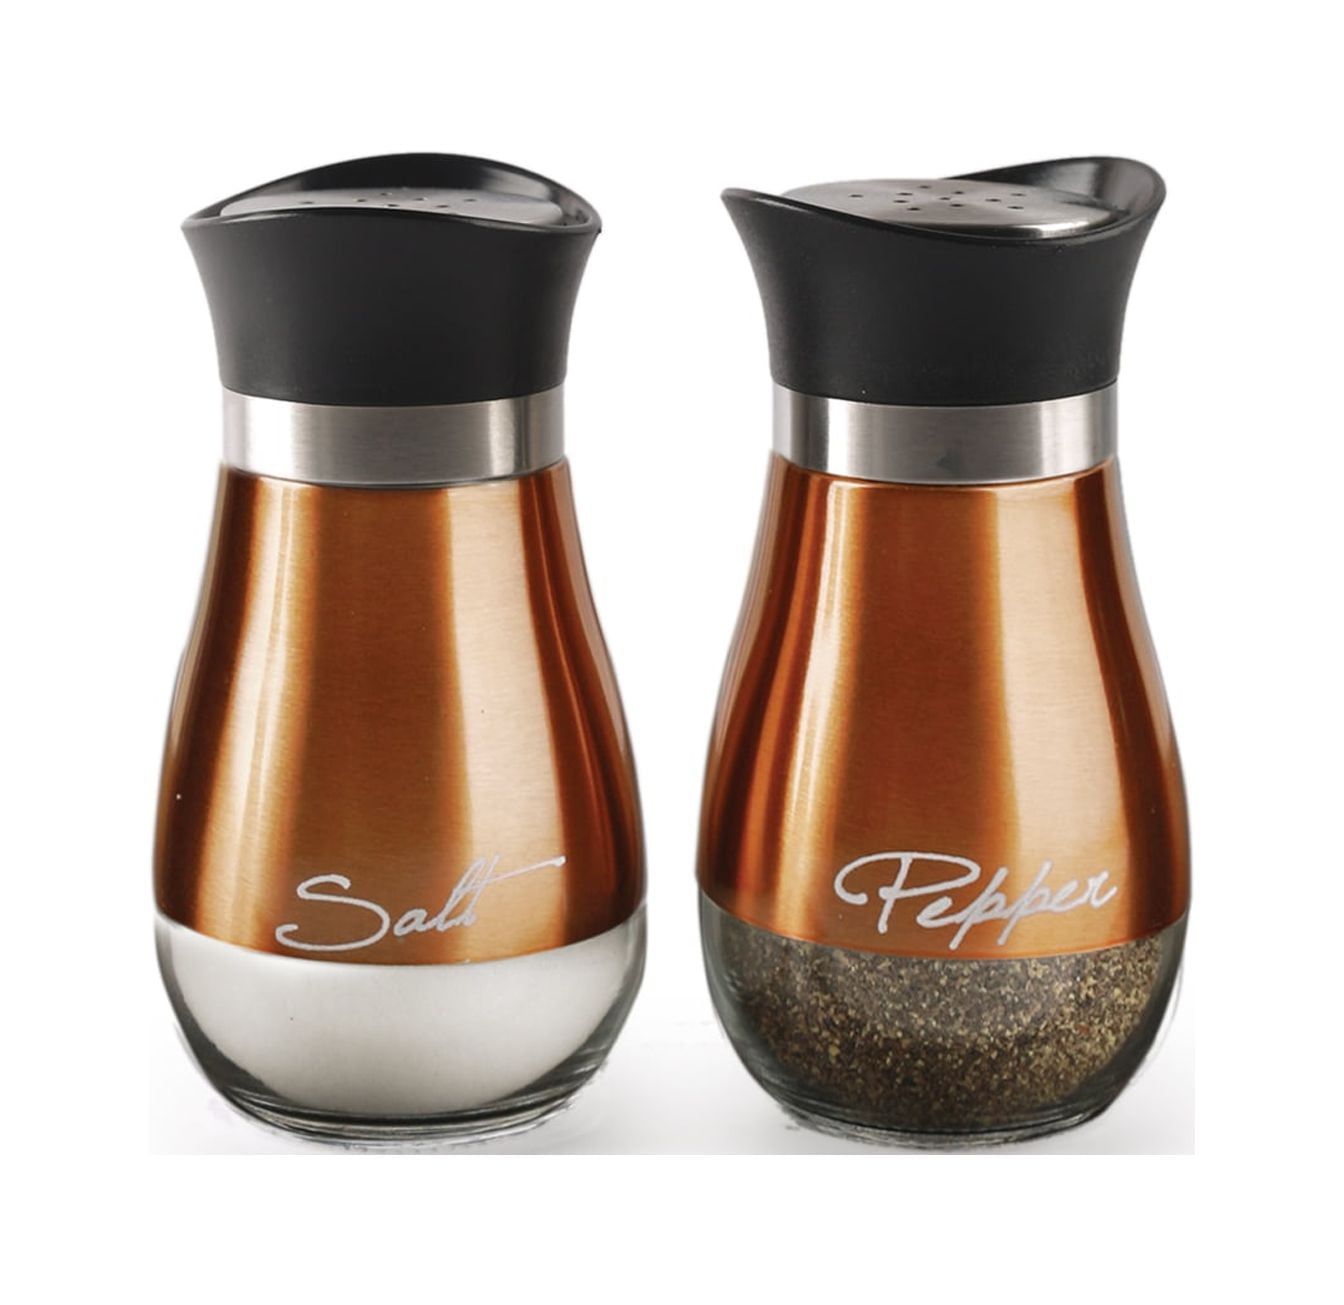 3 oz Square Glass Salt & Pepper Shakers (24 ea)